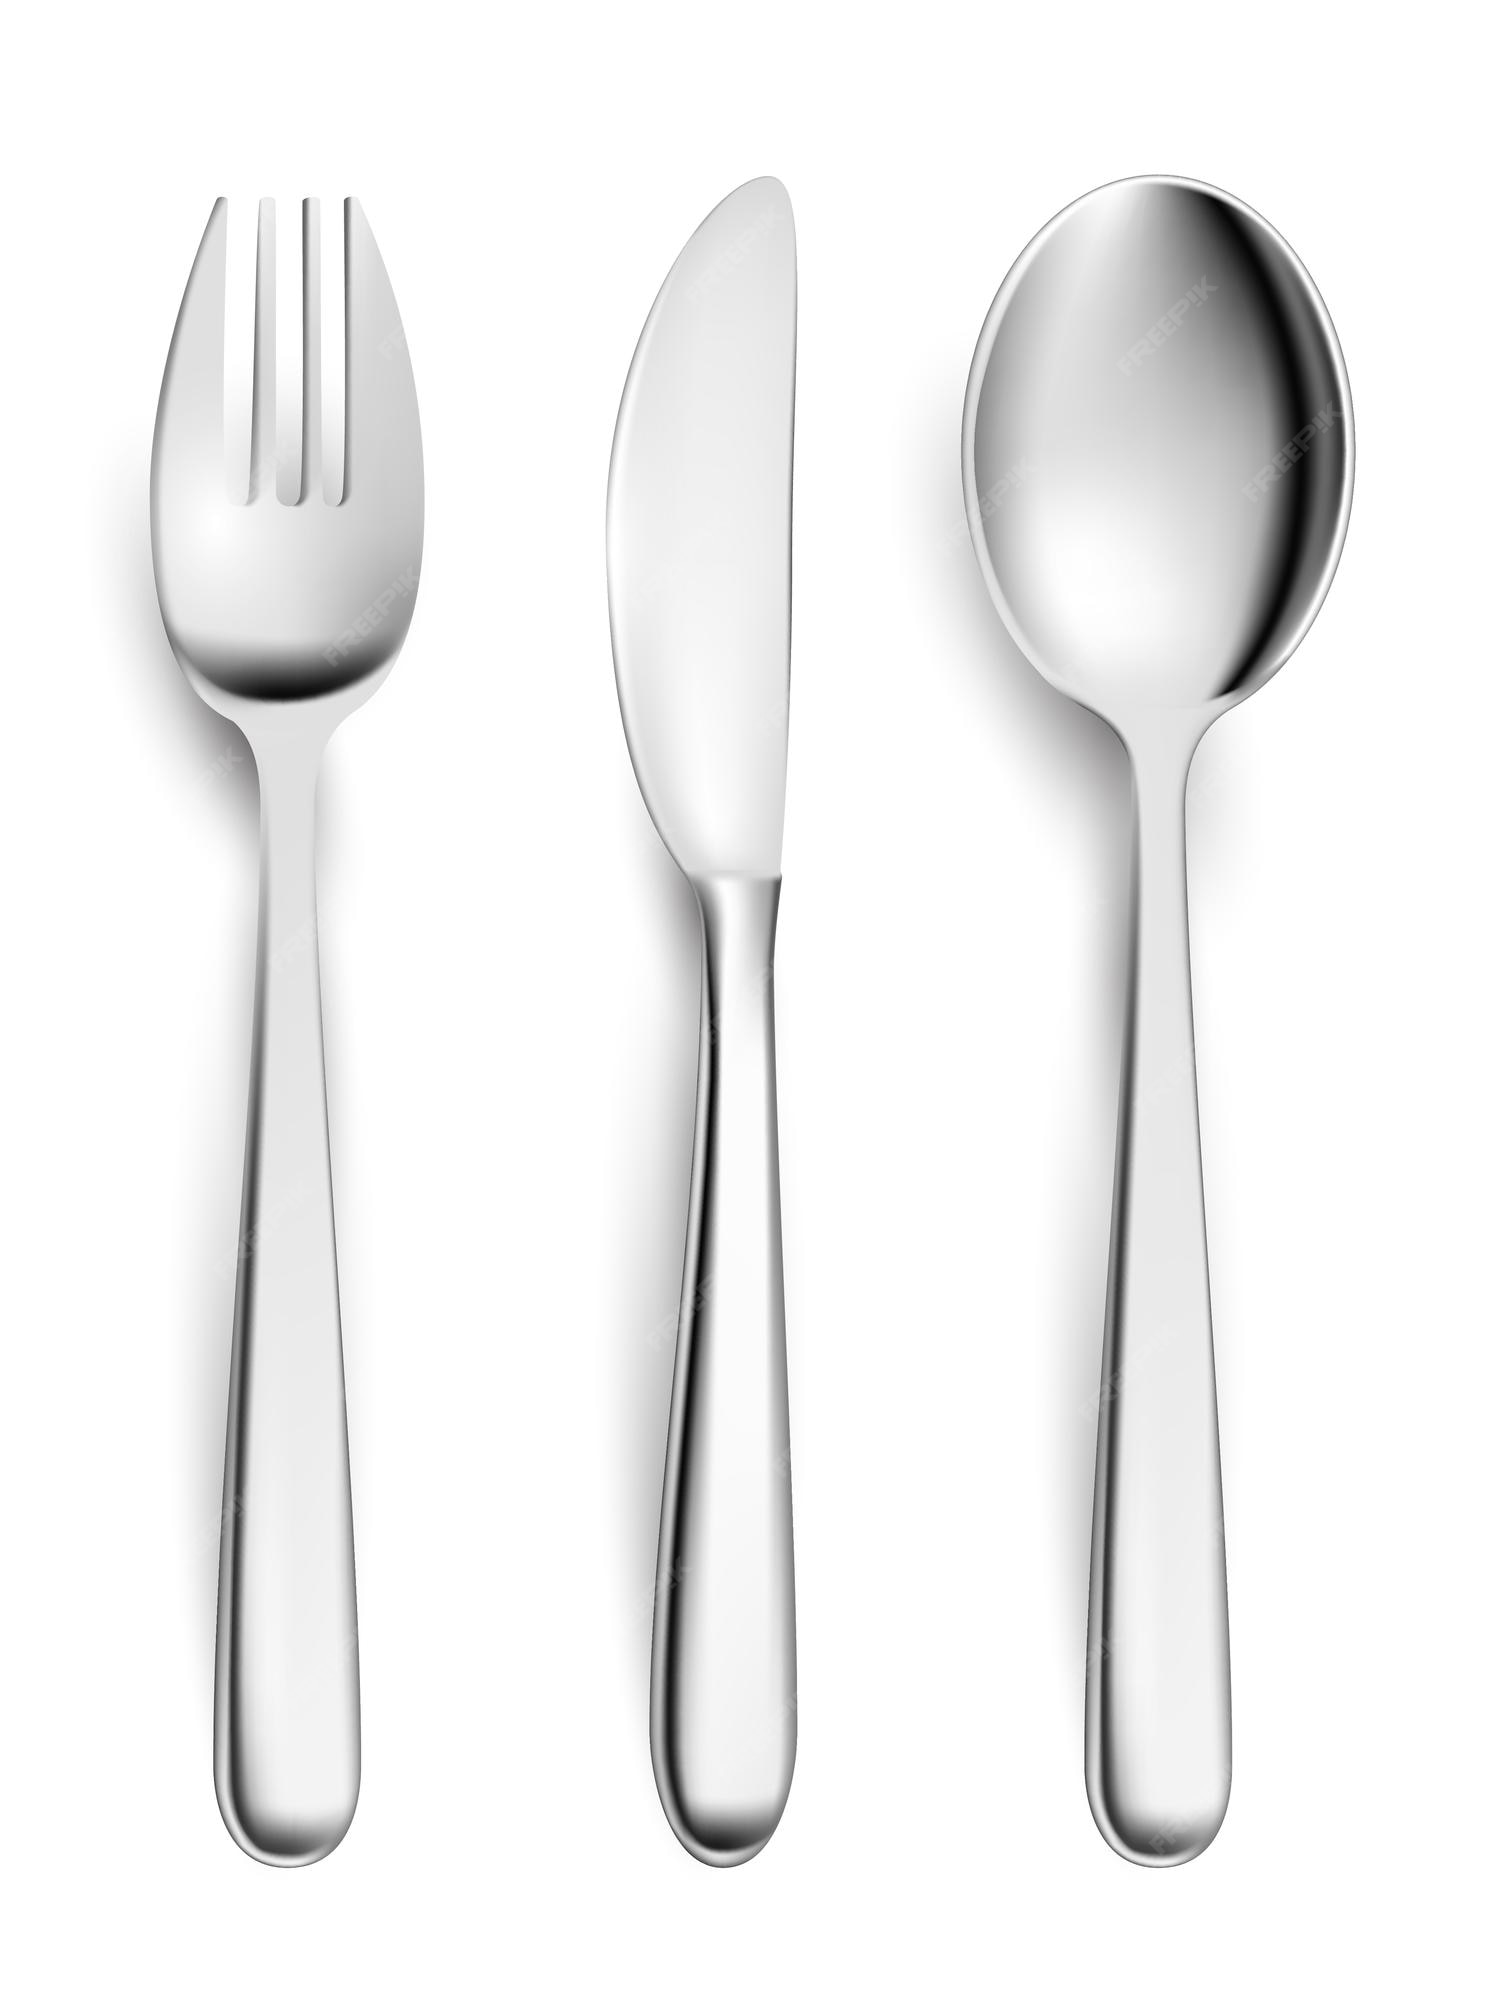 https://img.freepik.com/premium-vector/fork-knife-spoon-table-cutlery-set-flat-lay-clean-utensils-dinner-breakfast-supper-lunch-dining-silverware-isolated-white-background_575670-653.jpg?w=2000